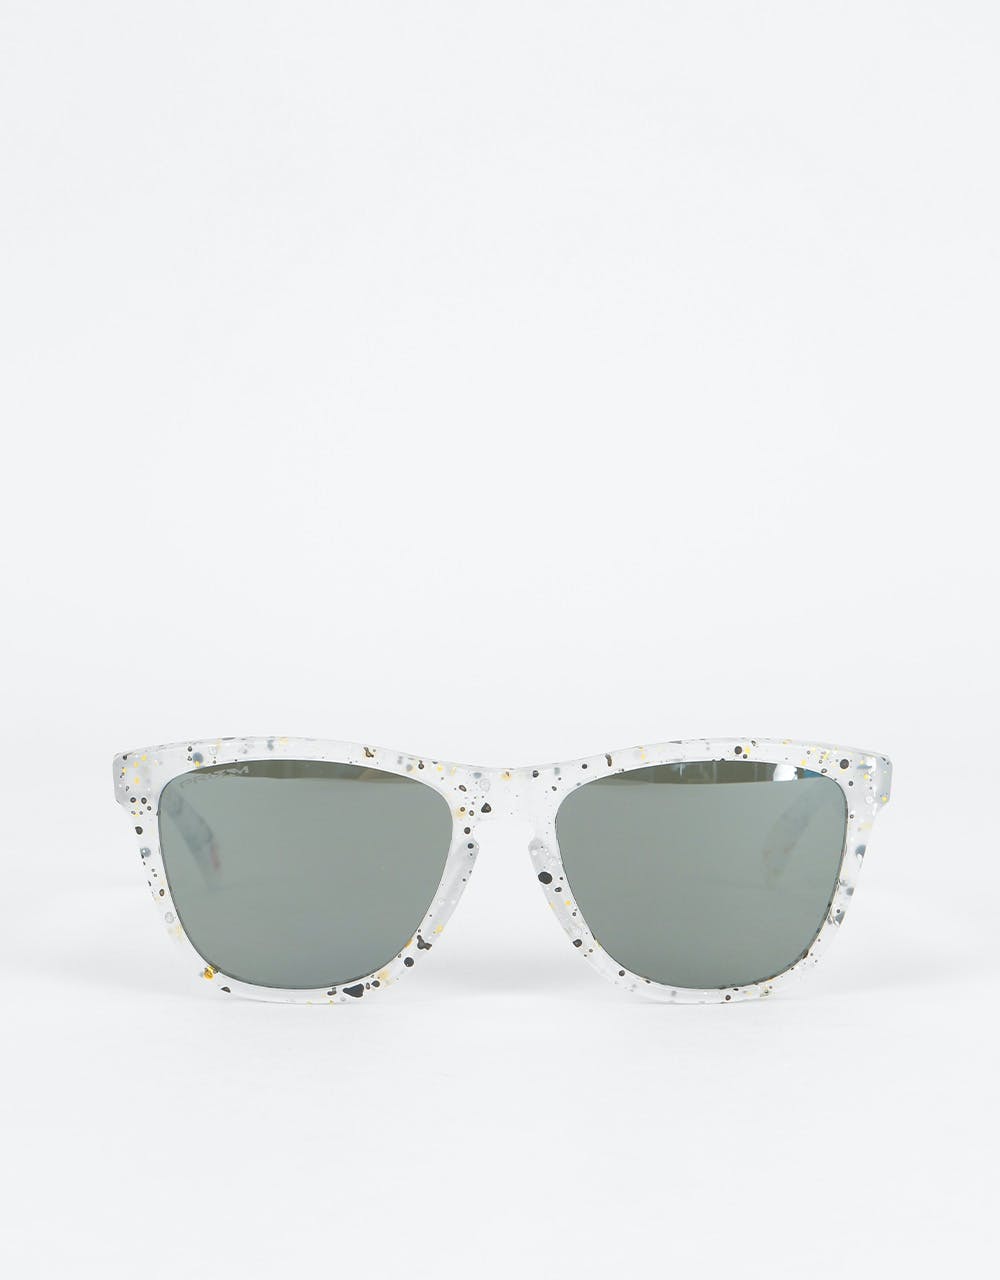 Oakley sunglasses for Sale | Men's Sunglasses | Gumtree